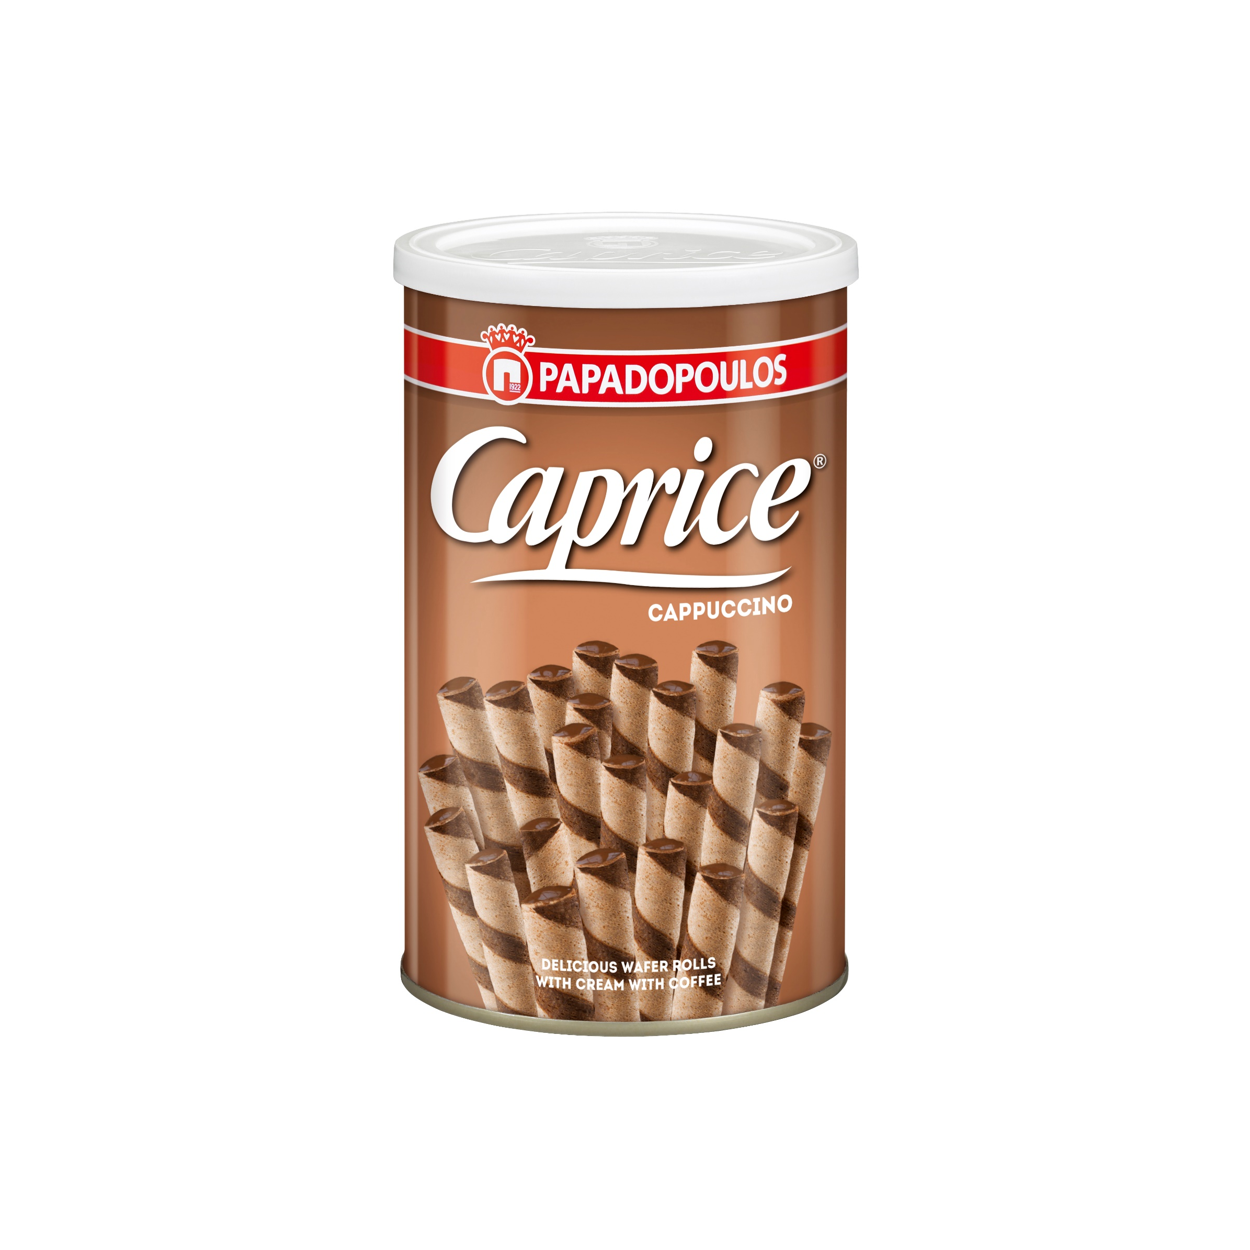 Caprice Cappuccino waffer rolls